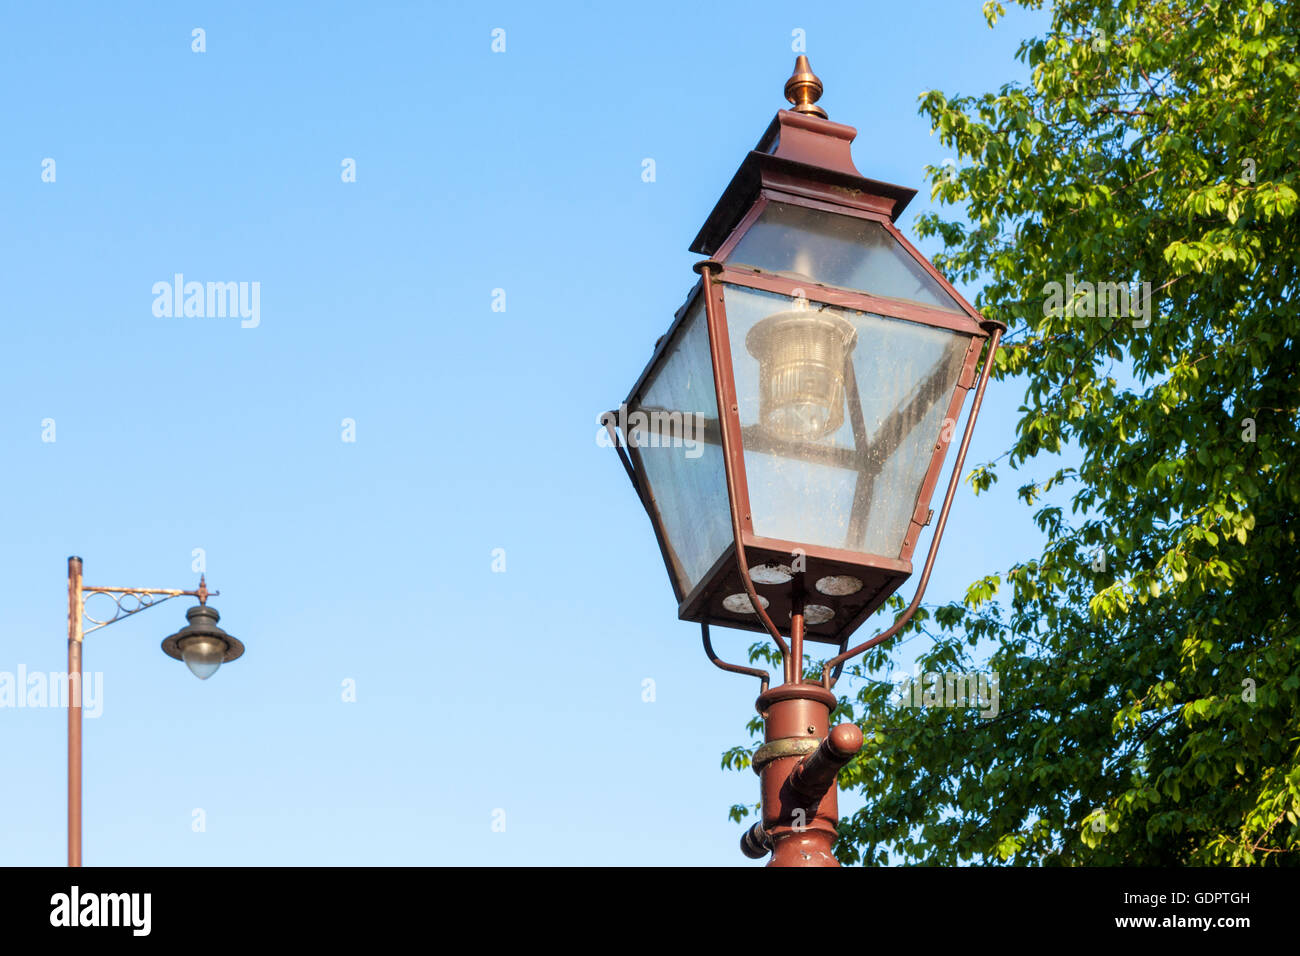 Street lamps. Traditional old style street lighting, England, UK Stock Photo